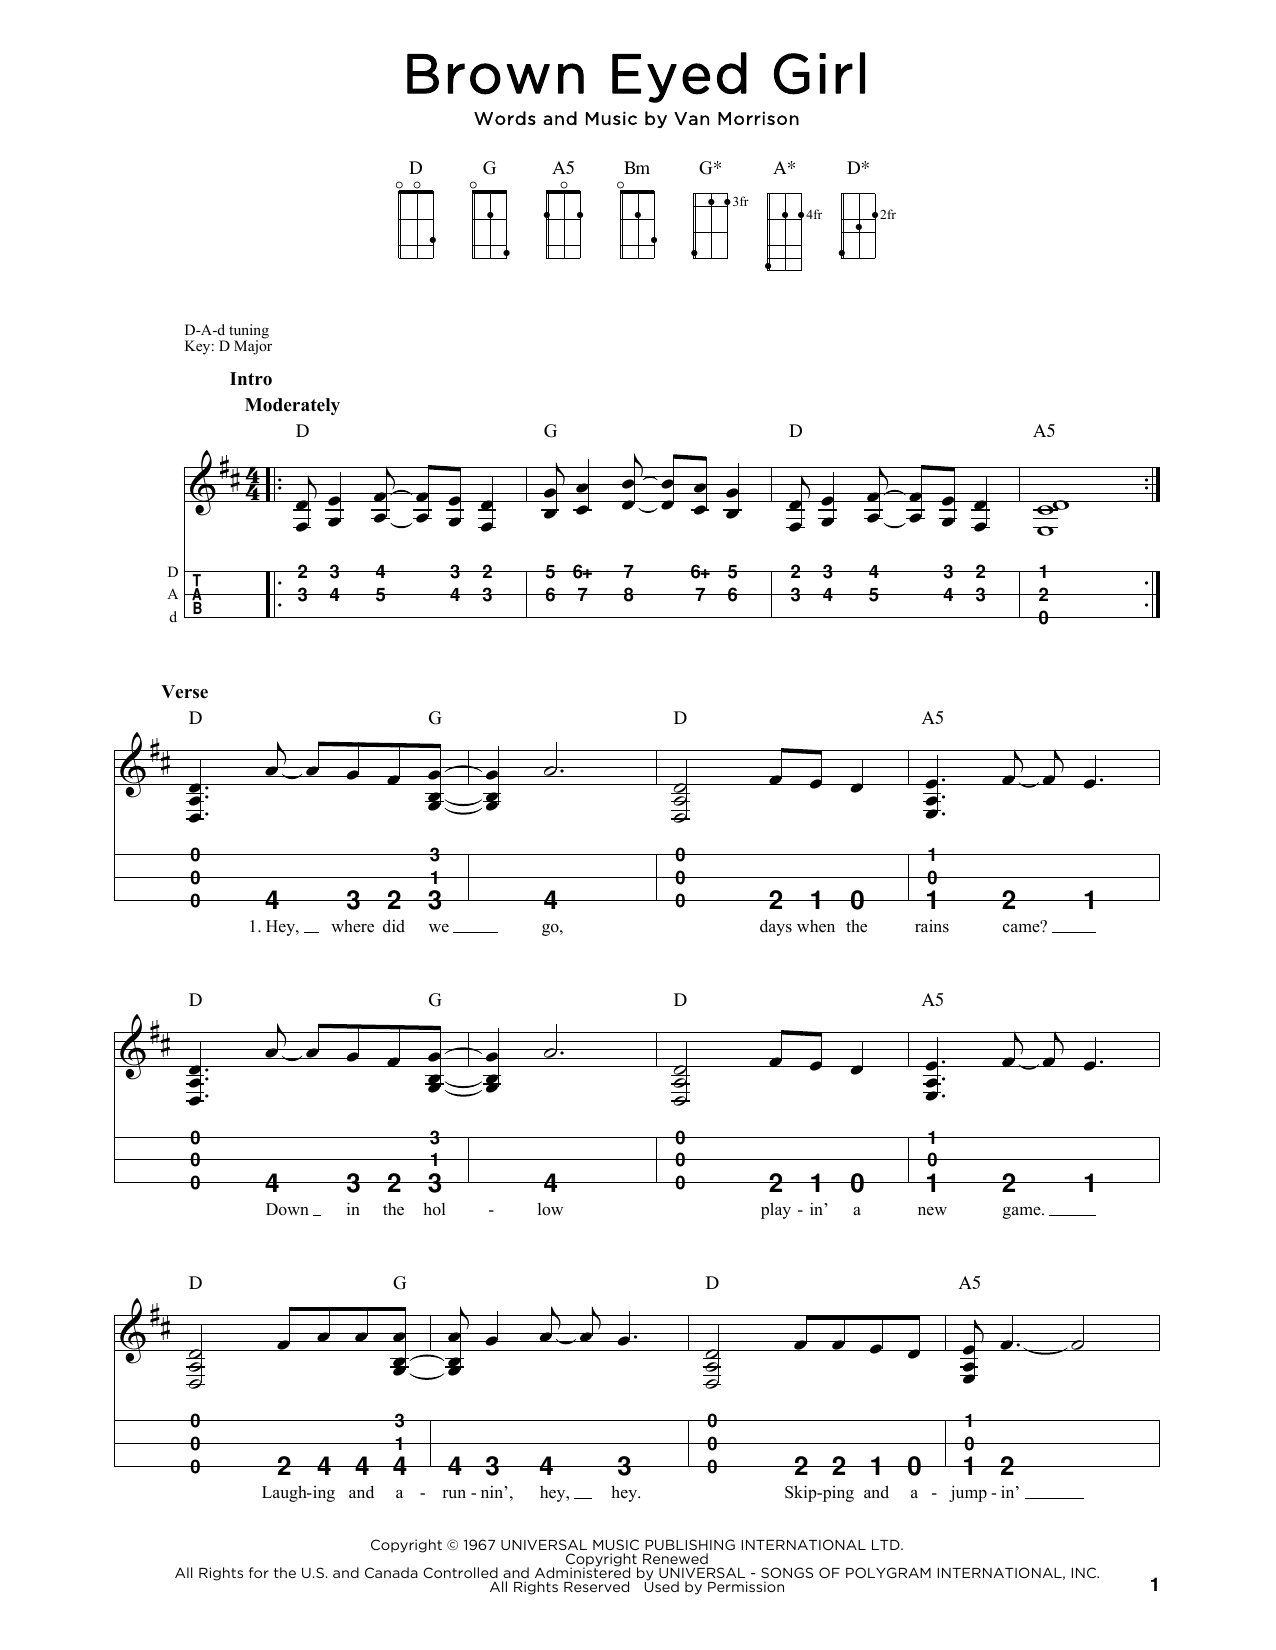 Van Morrison Brown Eyed Girl (arr. Steven B. Eulberg) Sheet Music Notes & Chords for Dulcimer - Download or Print PDF